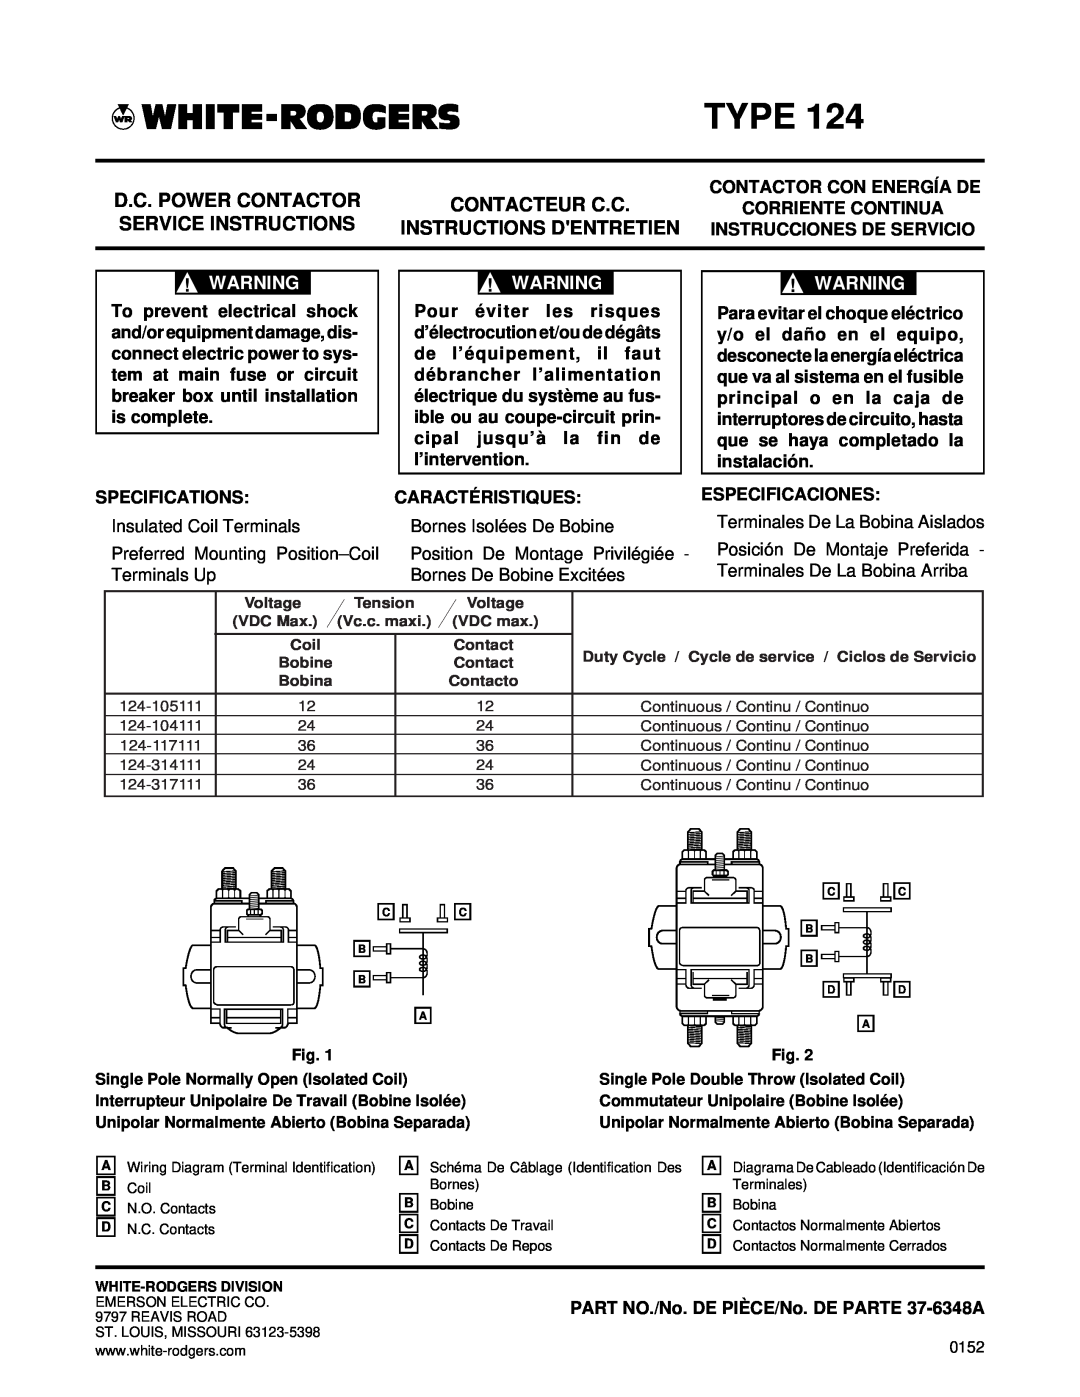 White Rodgers 37-6348A specifications Type, D.C. Power Contactor, Contacteur C.C, Service Instructions, Corriente Continua 